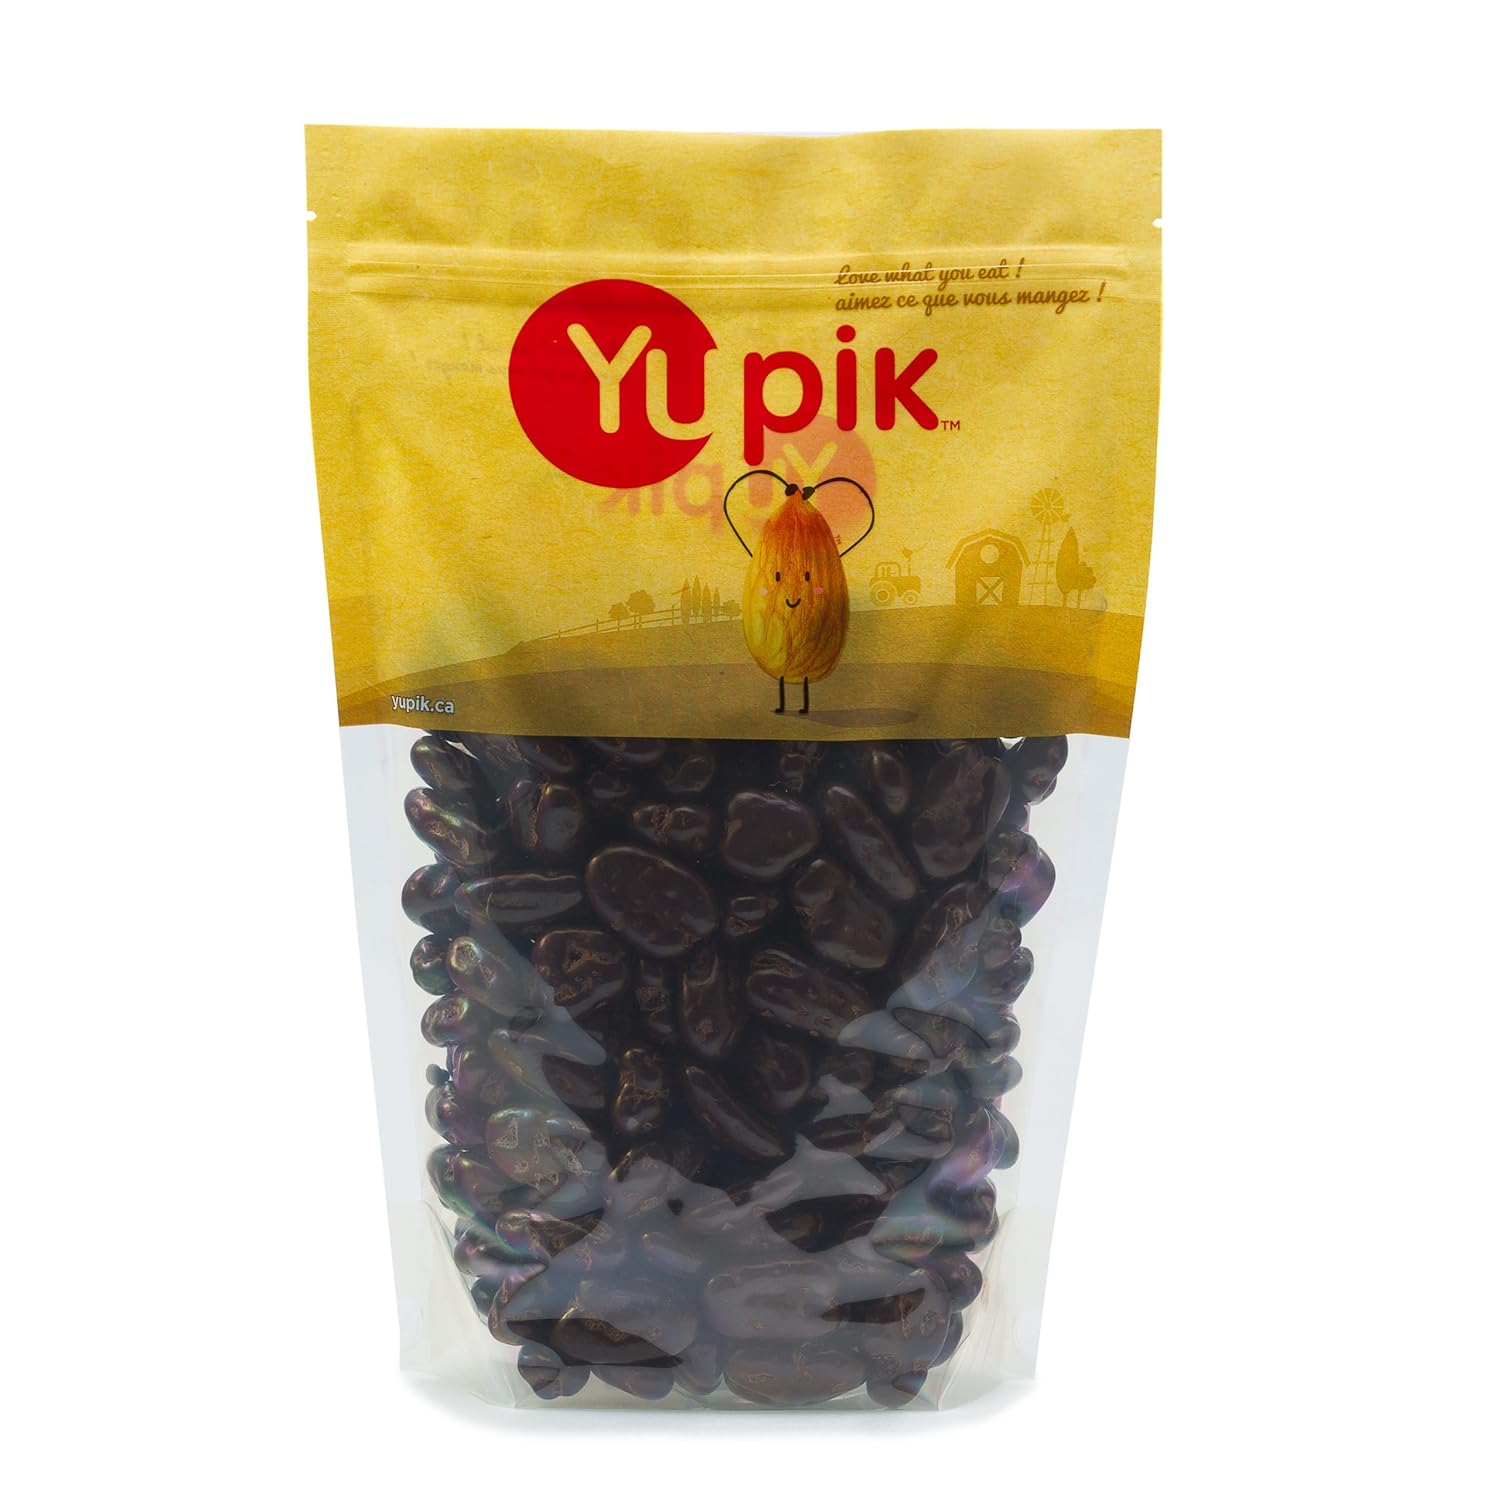 Yupik Dark Chocolate, Pecans, 2.2 lb, Pack of 1